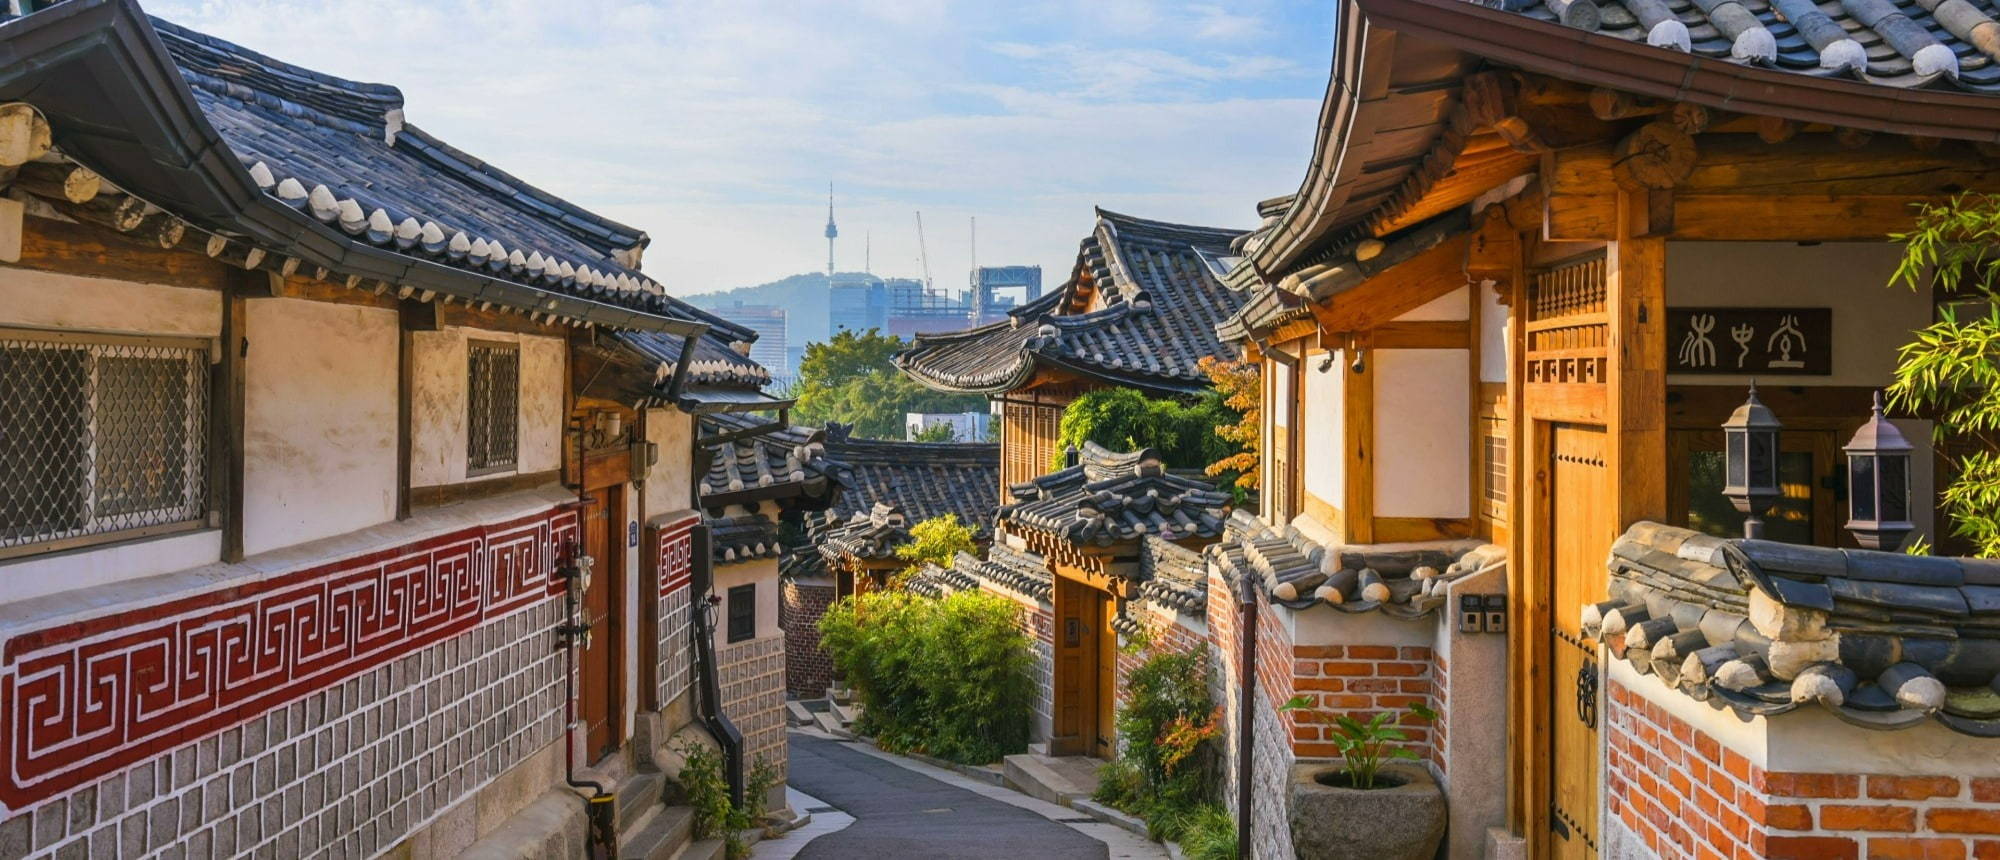 Korea Jobs | Rishworth Aviation | Korean garden and temple